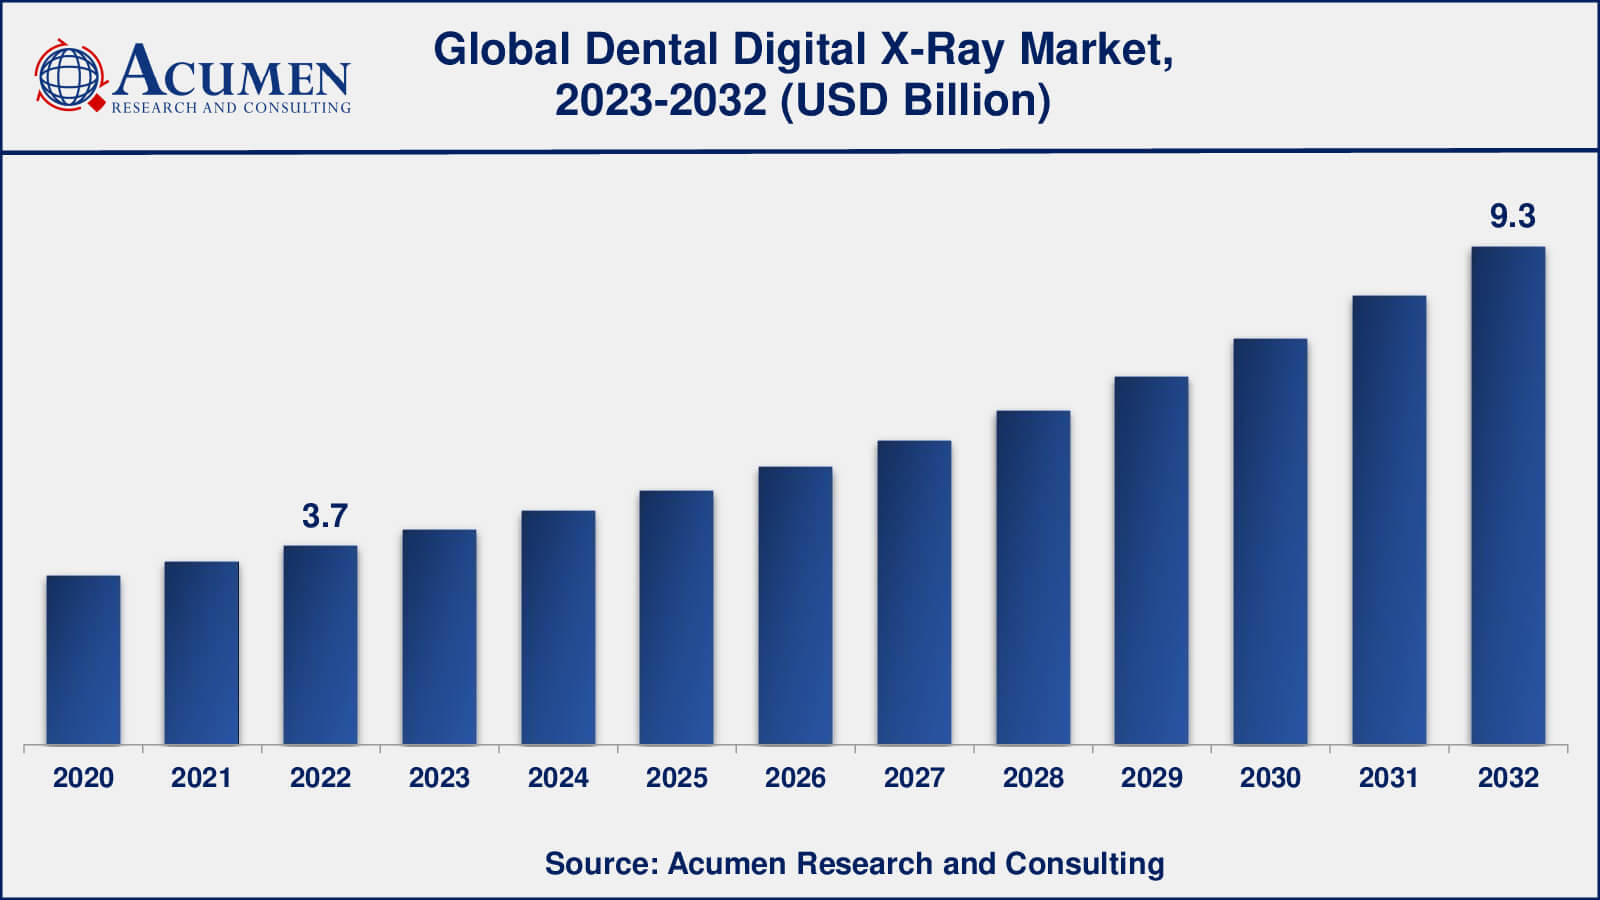 Dental Digital X-Ray Market Analysis Period